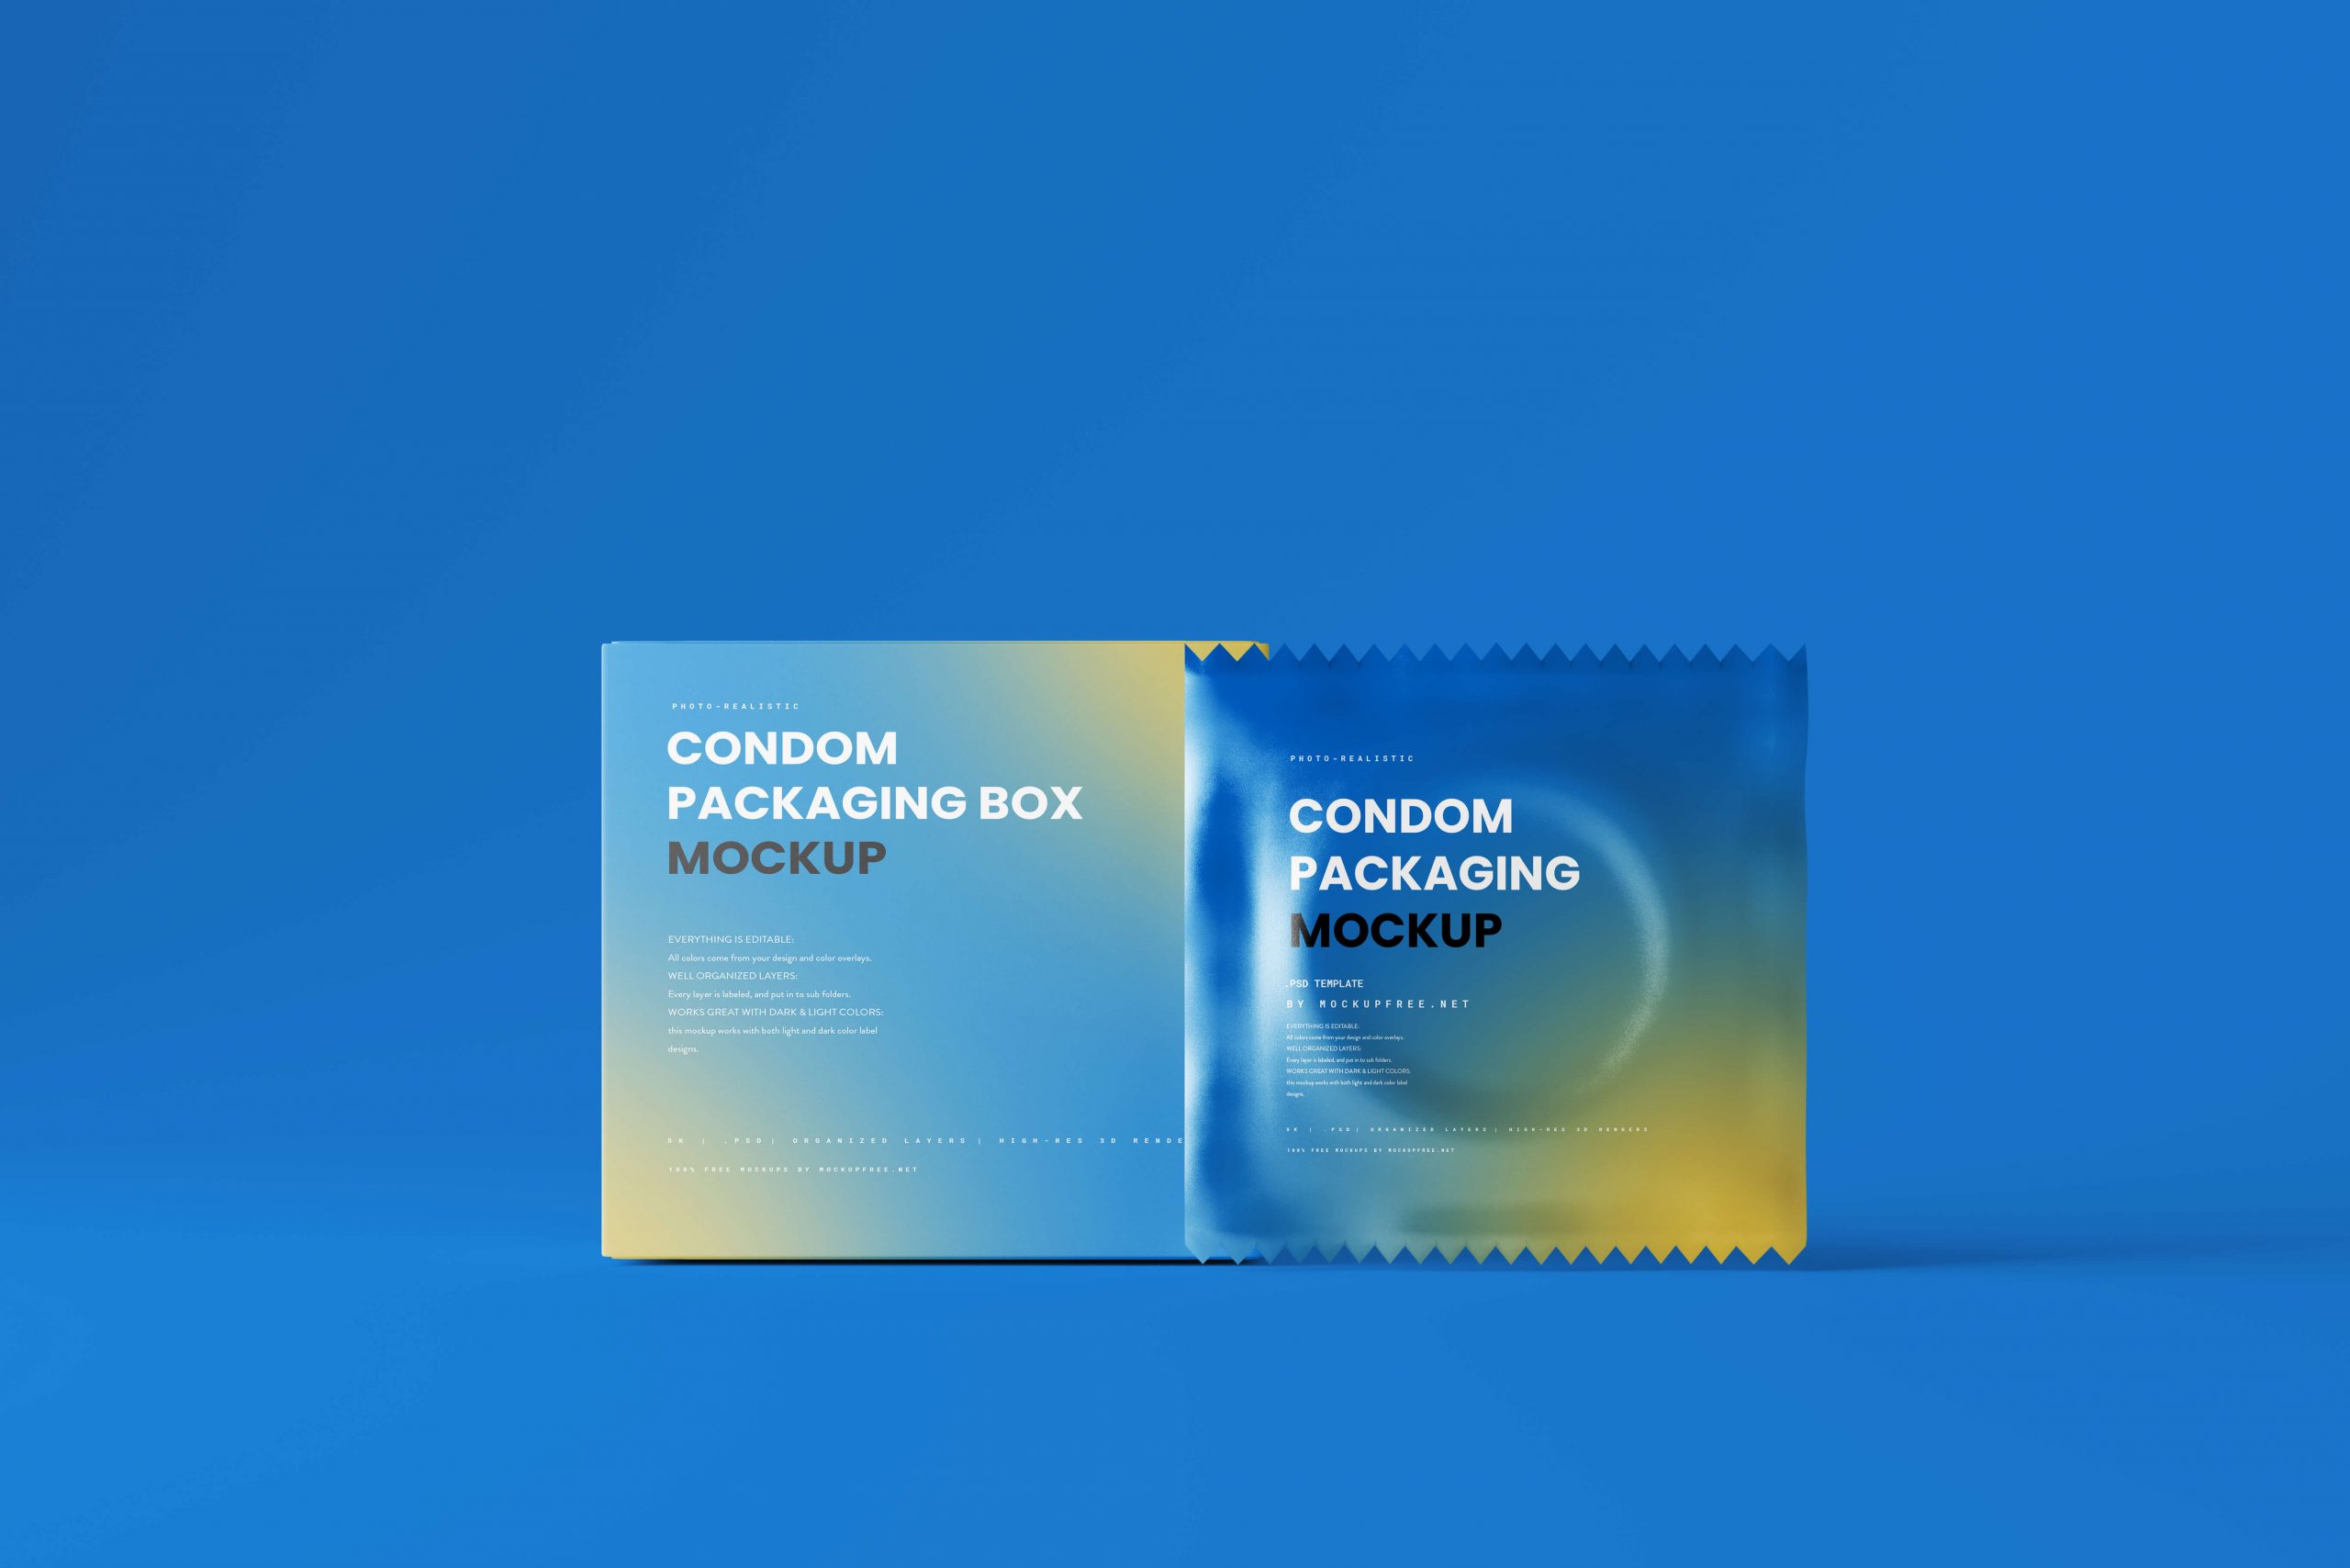 10 Free Condom Sachet Packaging Box Mockup PSD Files7